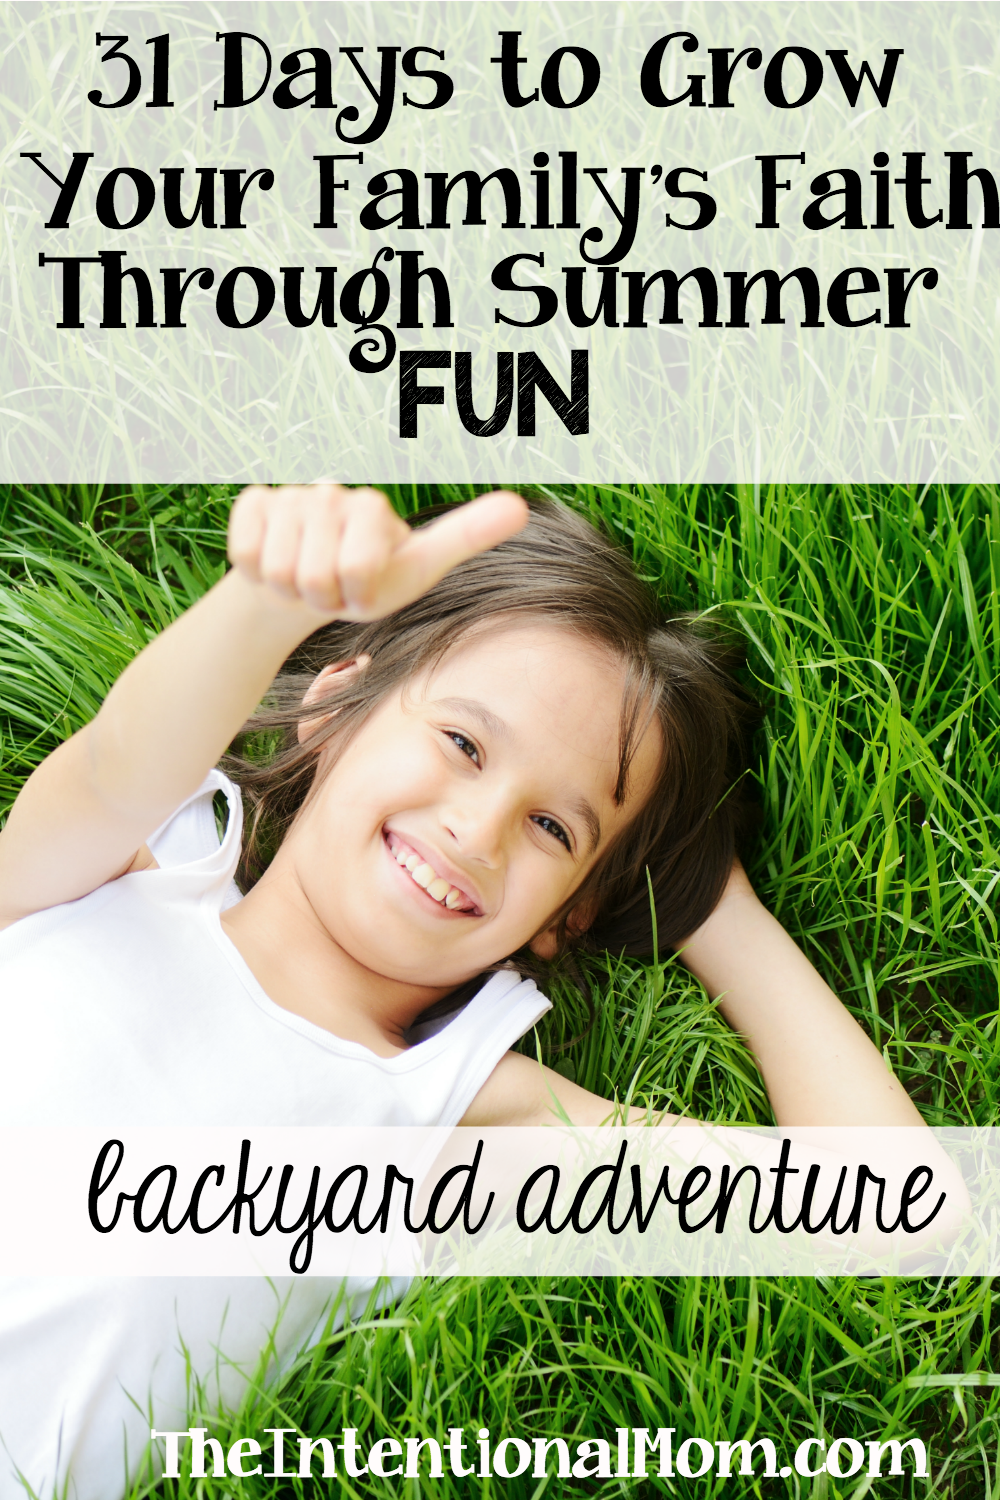 31 Ways to Grow Your Family’s Faith Through Summer Fun – Backyard Adventure